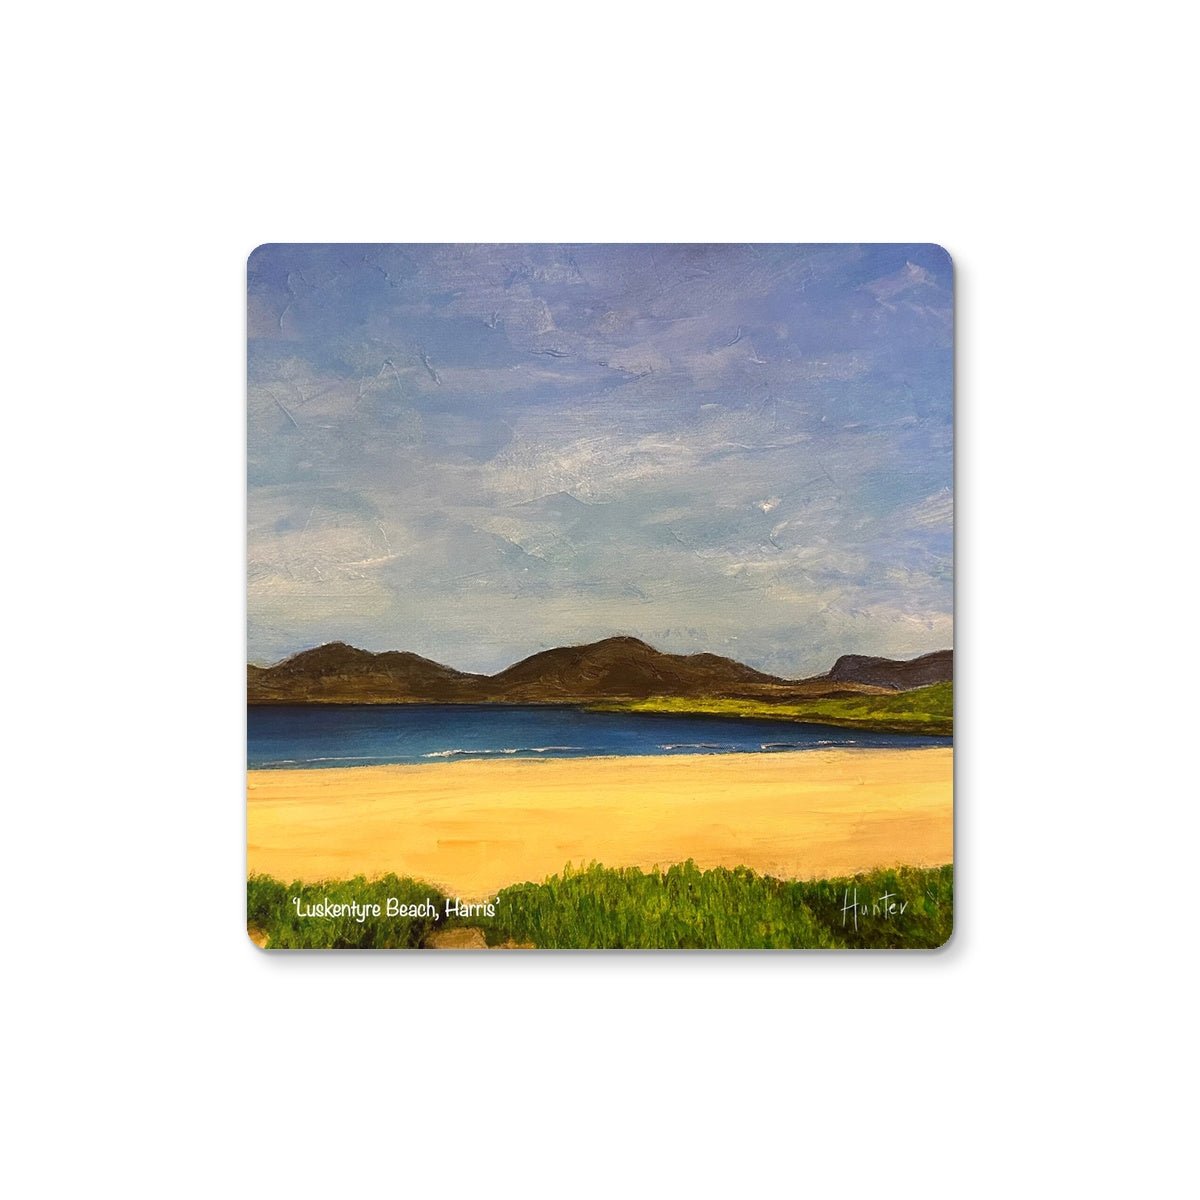 Luskentyre Beach Harris Art Gifts Coaster-Coasters-Hebridean Islands Art Gallery-Single Coaster-Paintings, Prints, Homeware, Art Gifts From Scotland By Scottish Artist Kevin Hunter